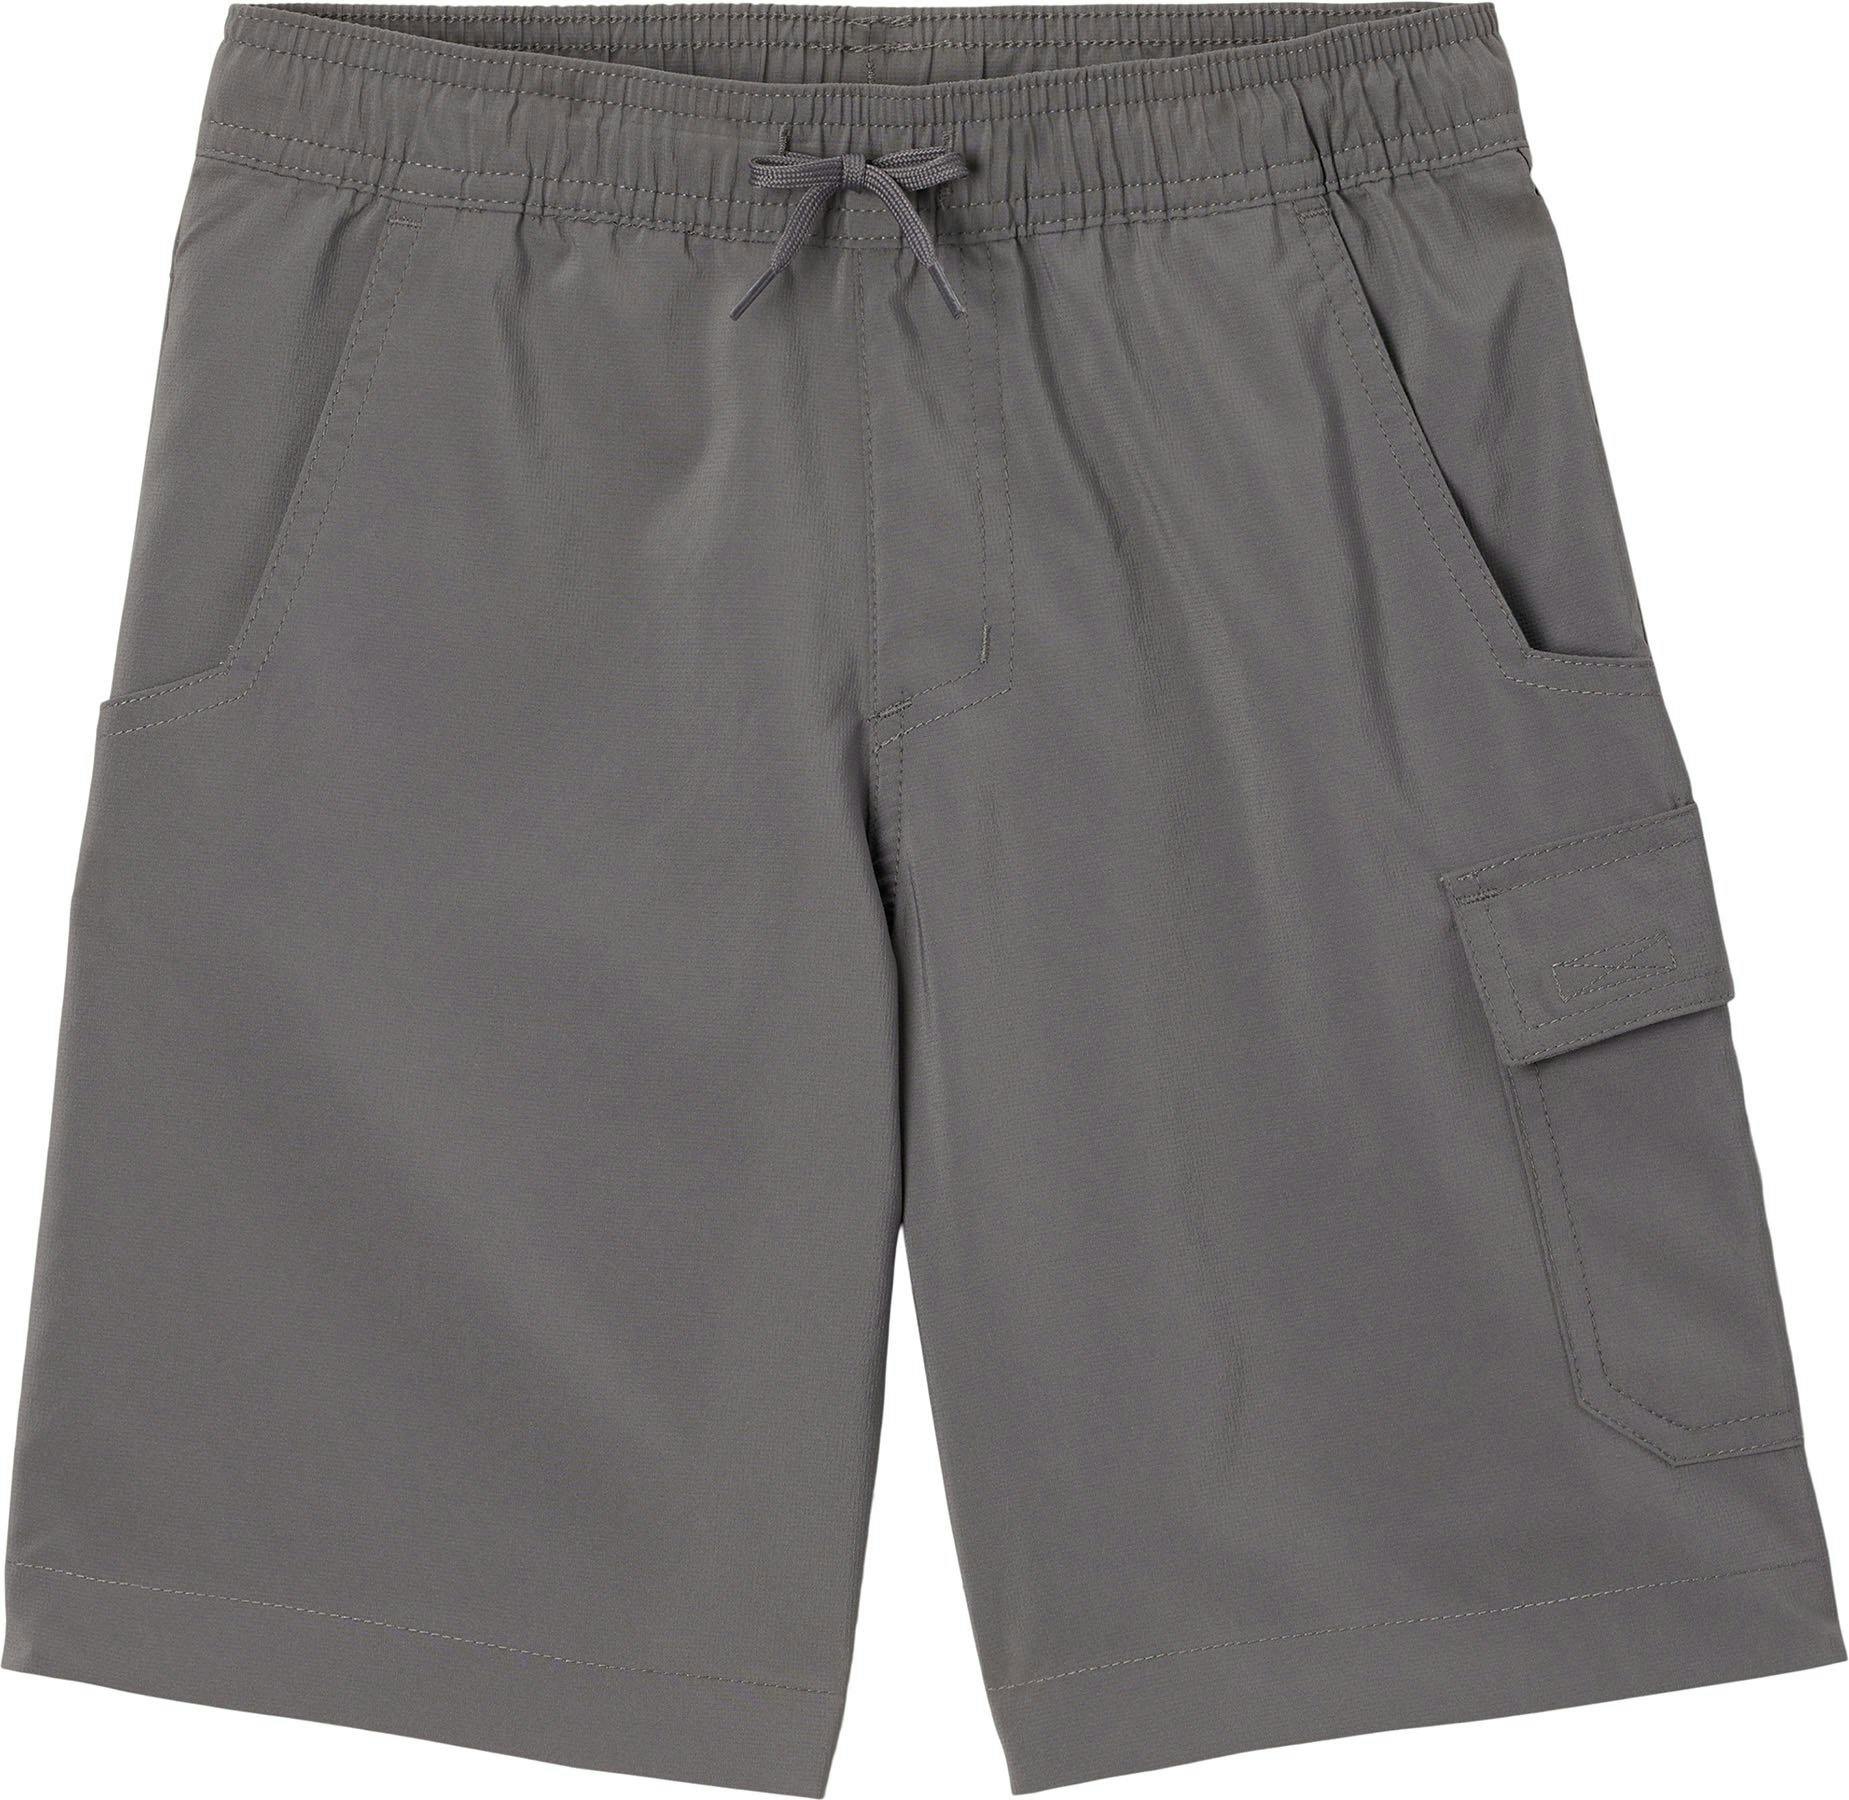 Product image for Silver Ridge Utility Shorts - Boys